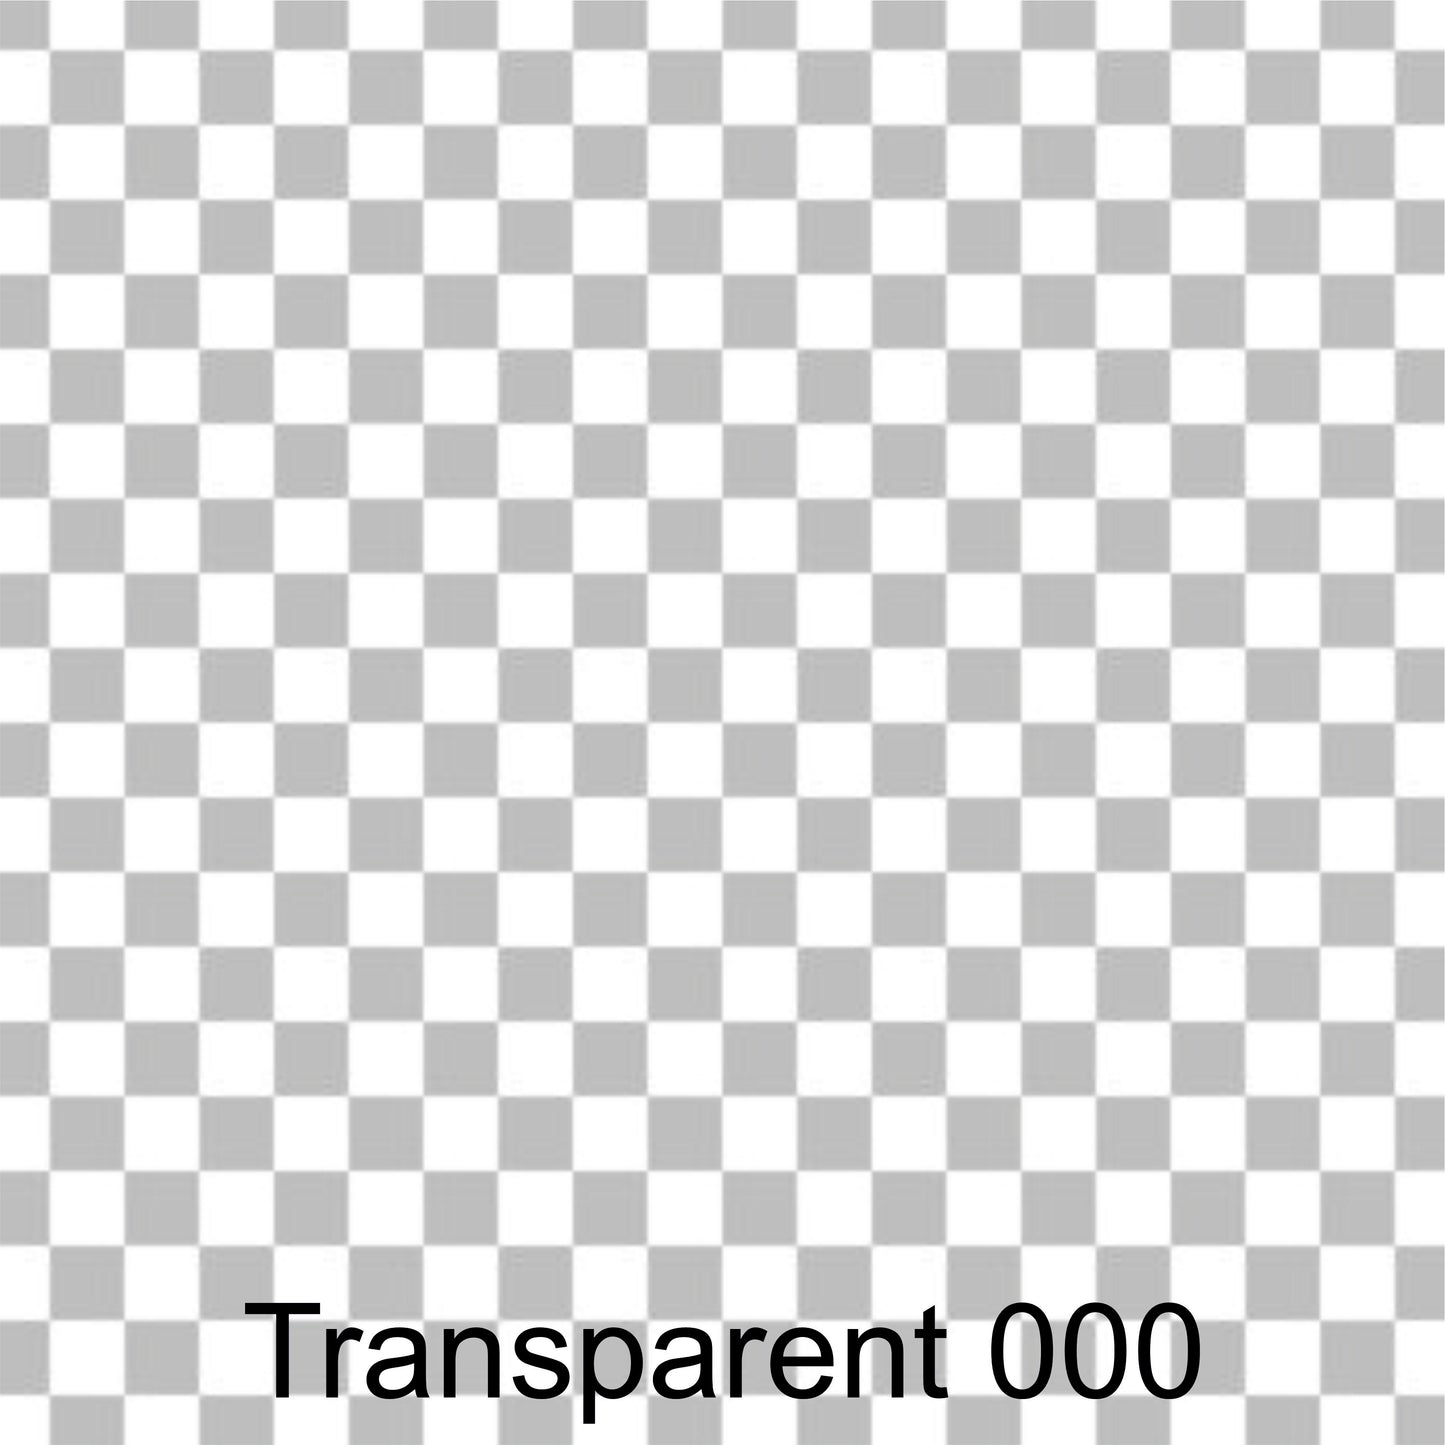 Oracal 651 Gloss :- Transparent/Clear - 000